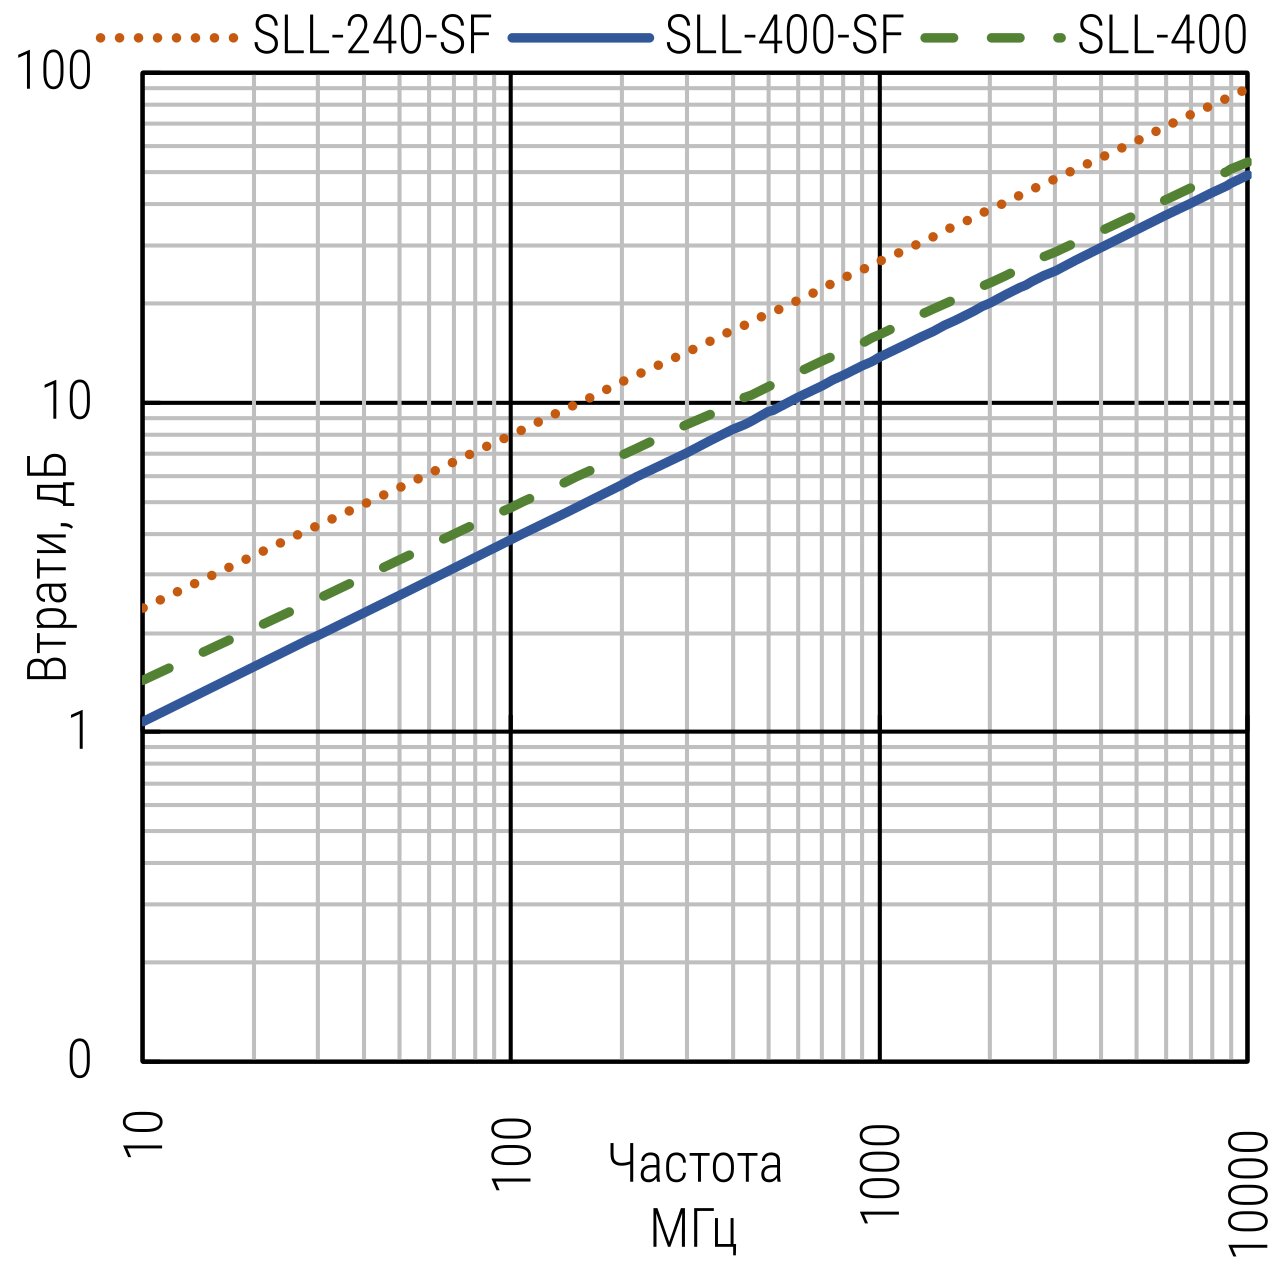 SLL-400-SF